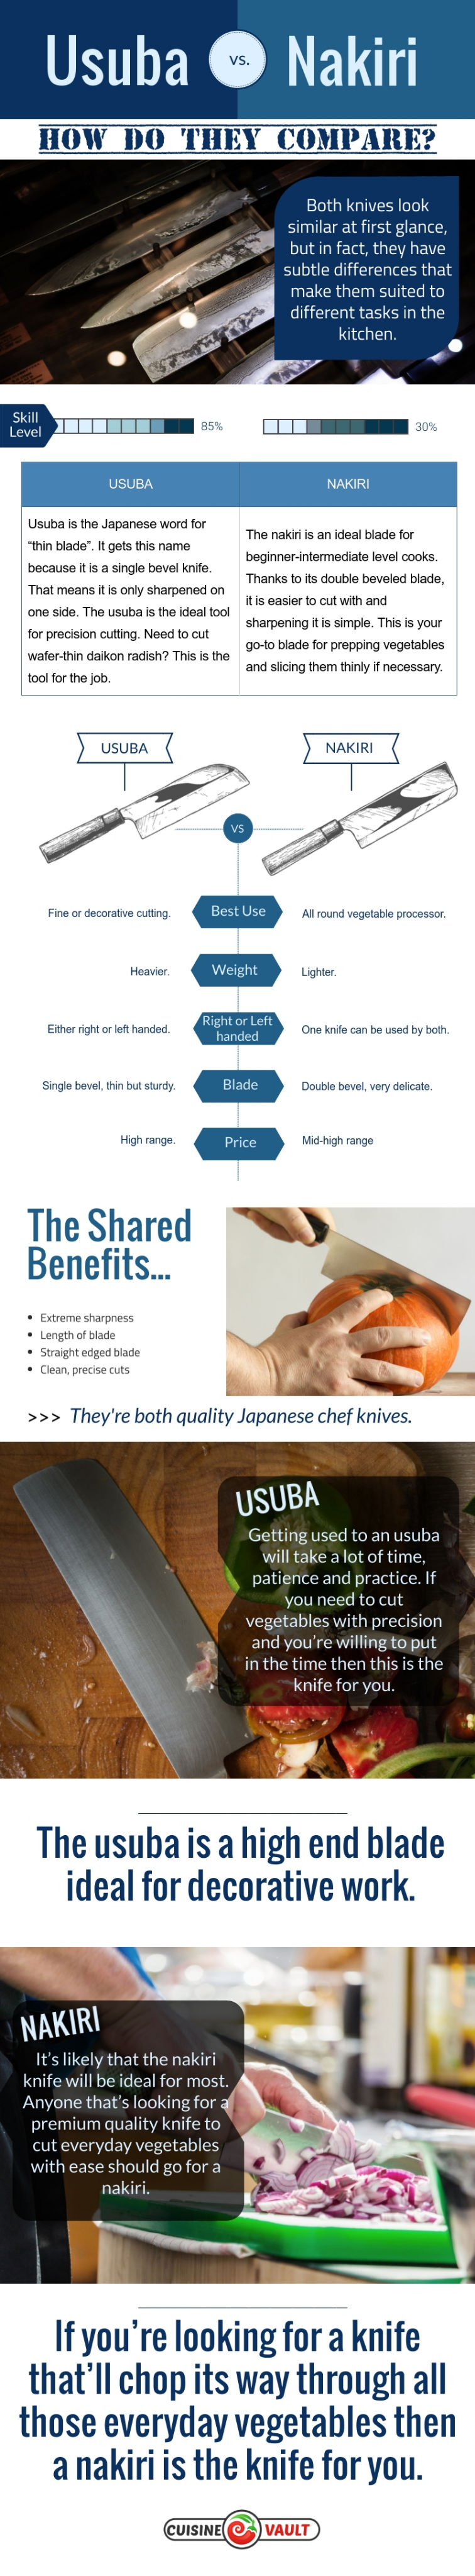 An infographic comparing the usuba and nakiri knife.